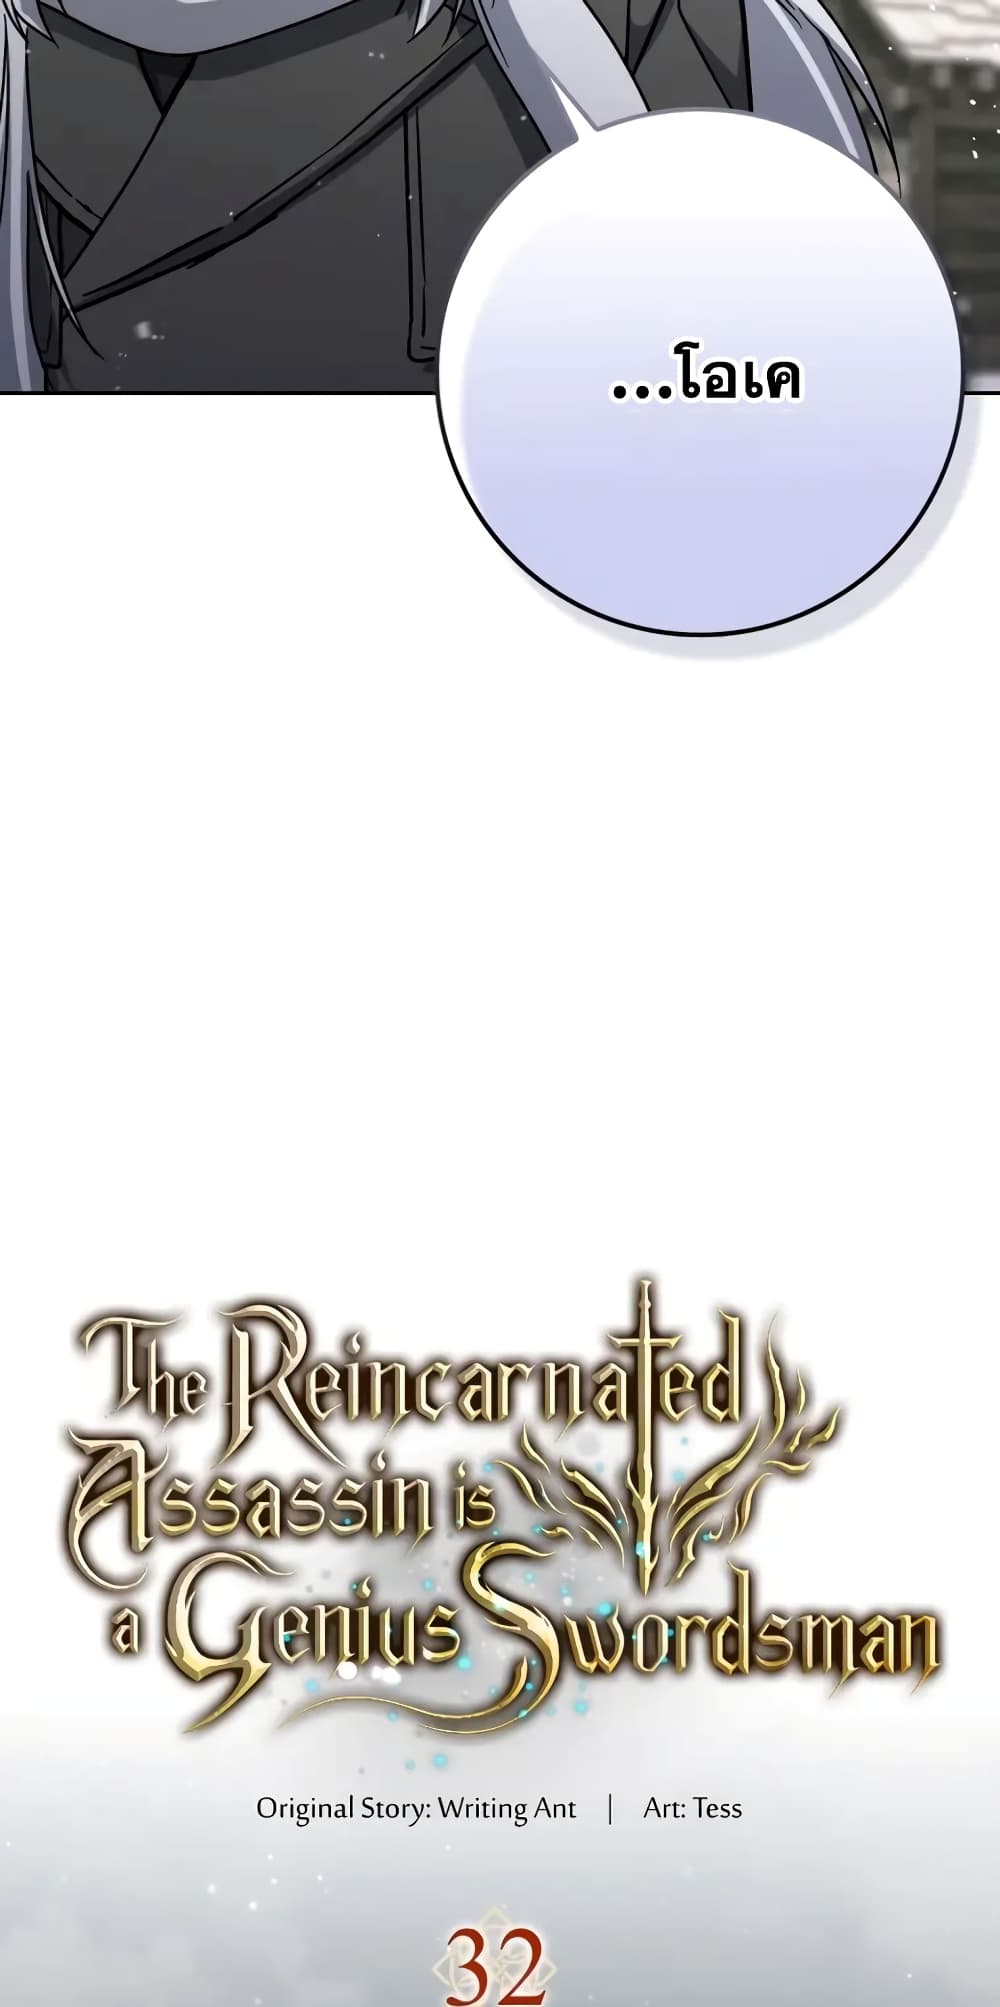 The Reincarnated Assassin is a Genius Swordsman 32-32